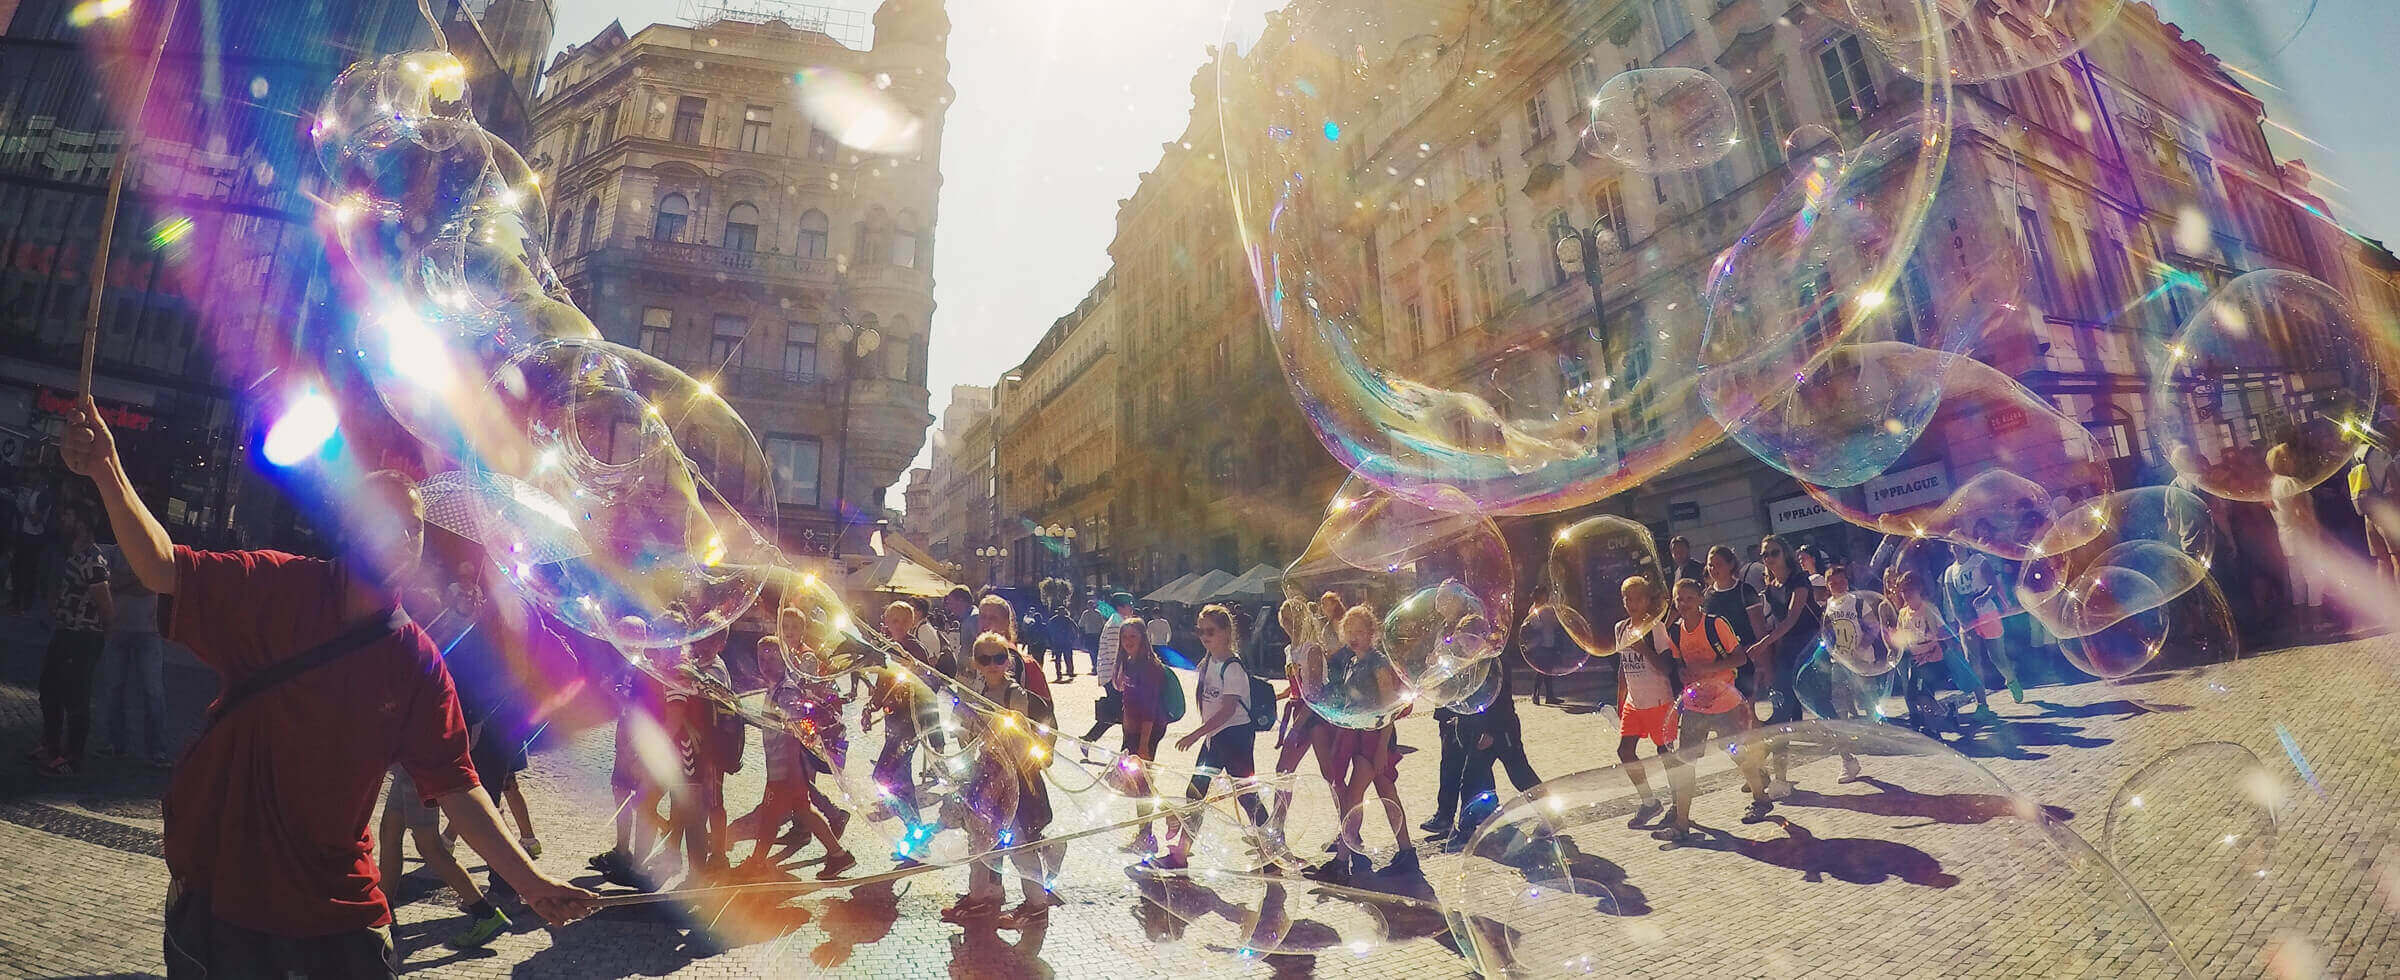 bubbles in city